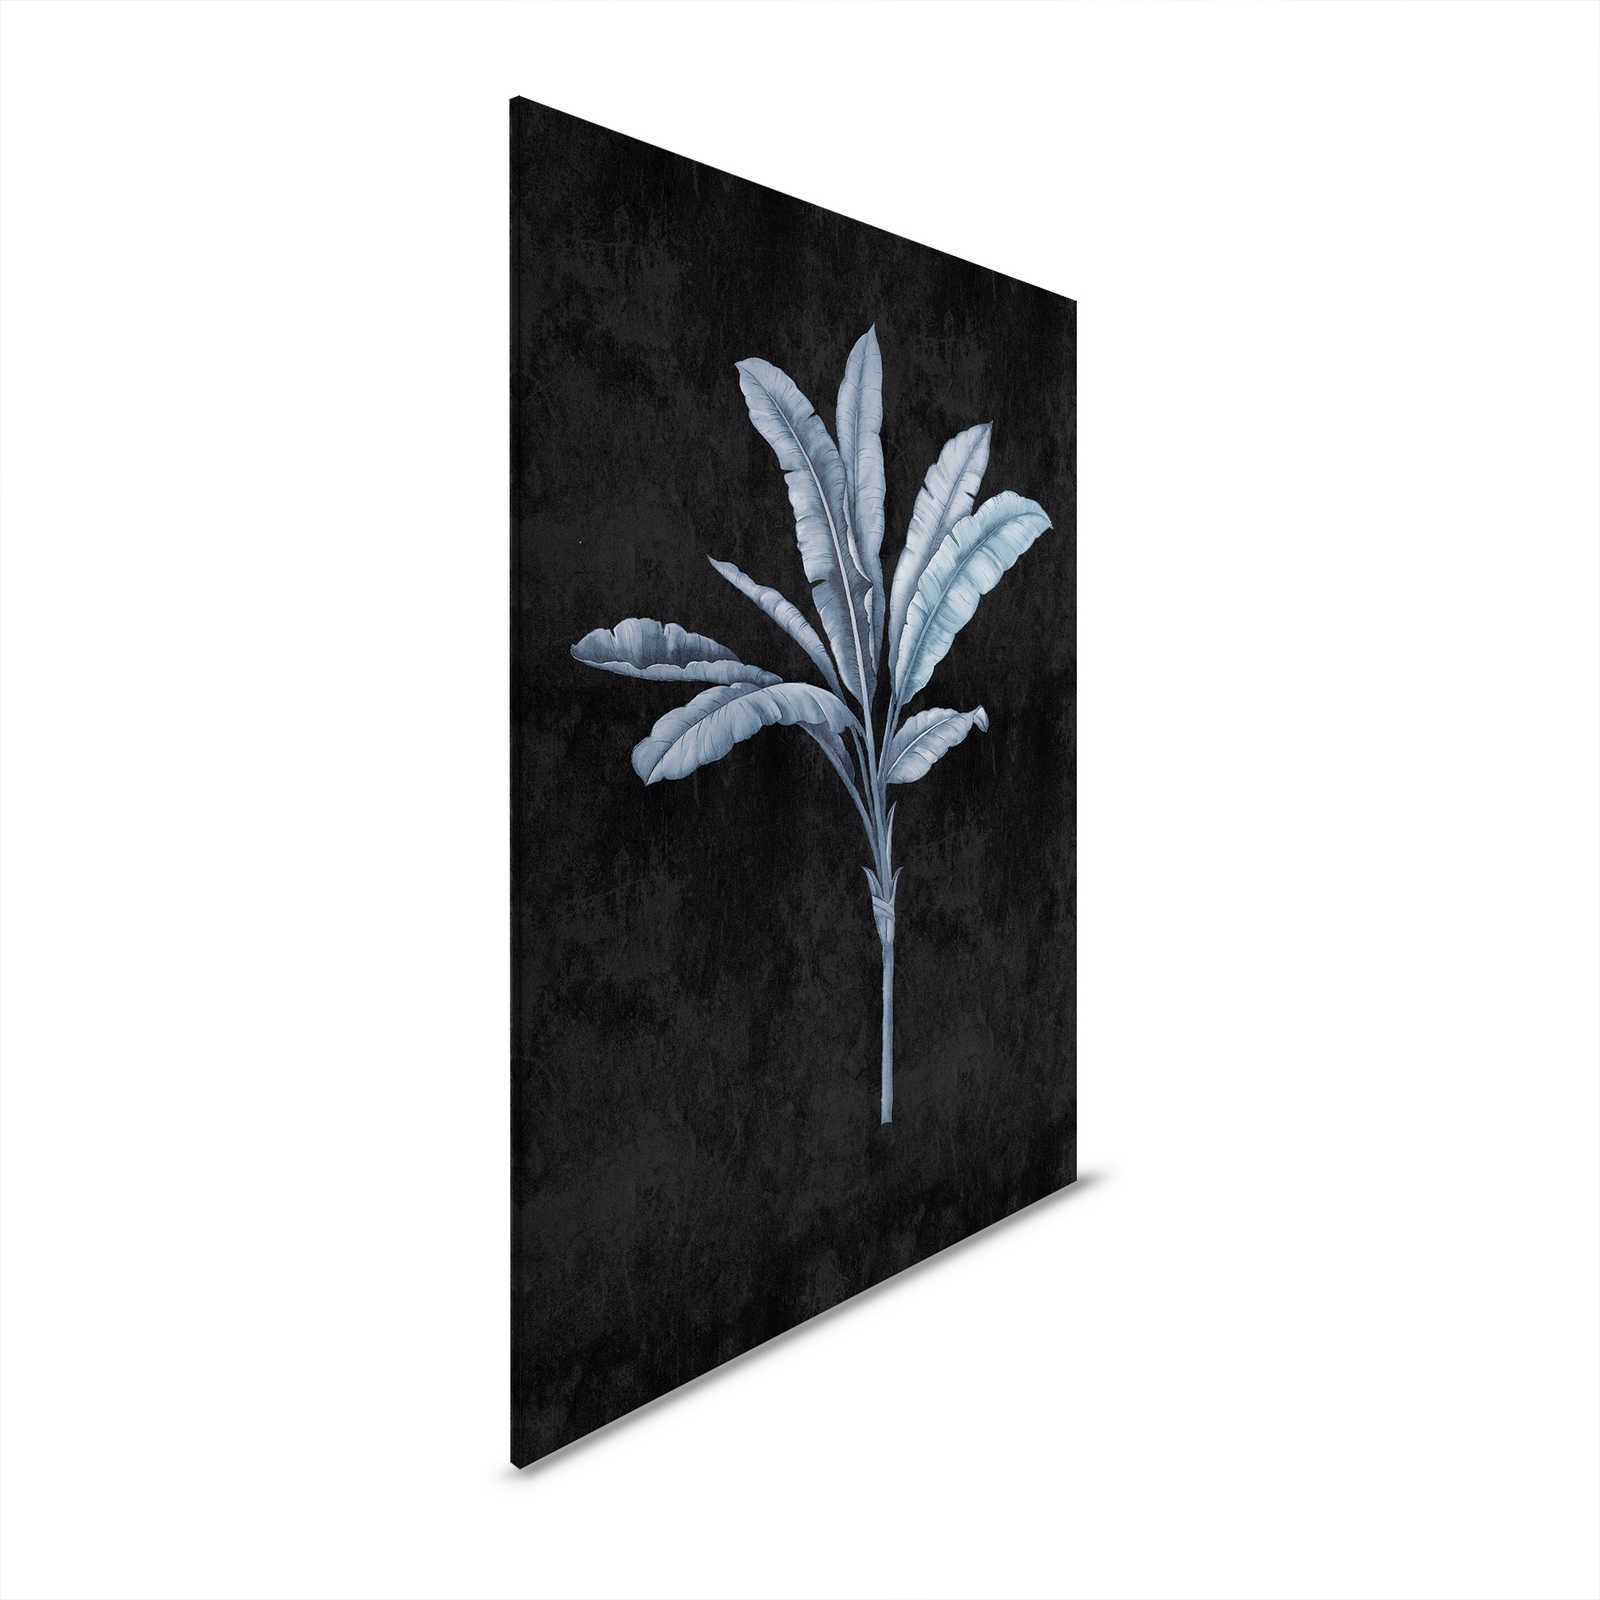         Fiji 2 - Leinwandbild Schwarz mit Blau Grauem Palmen-Motiv – 0,60 m x 0,90 m
    